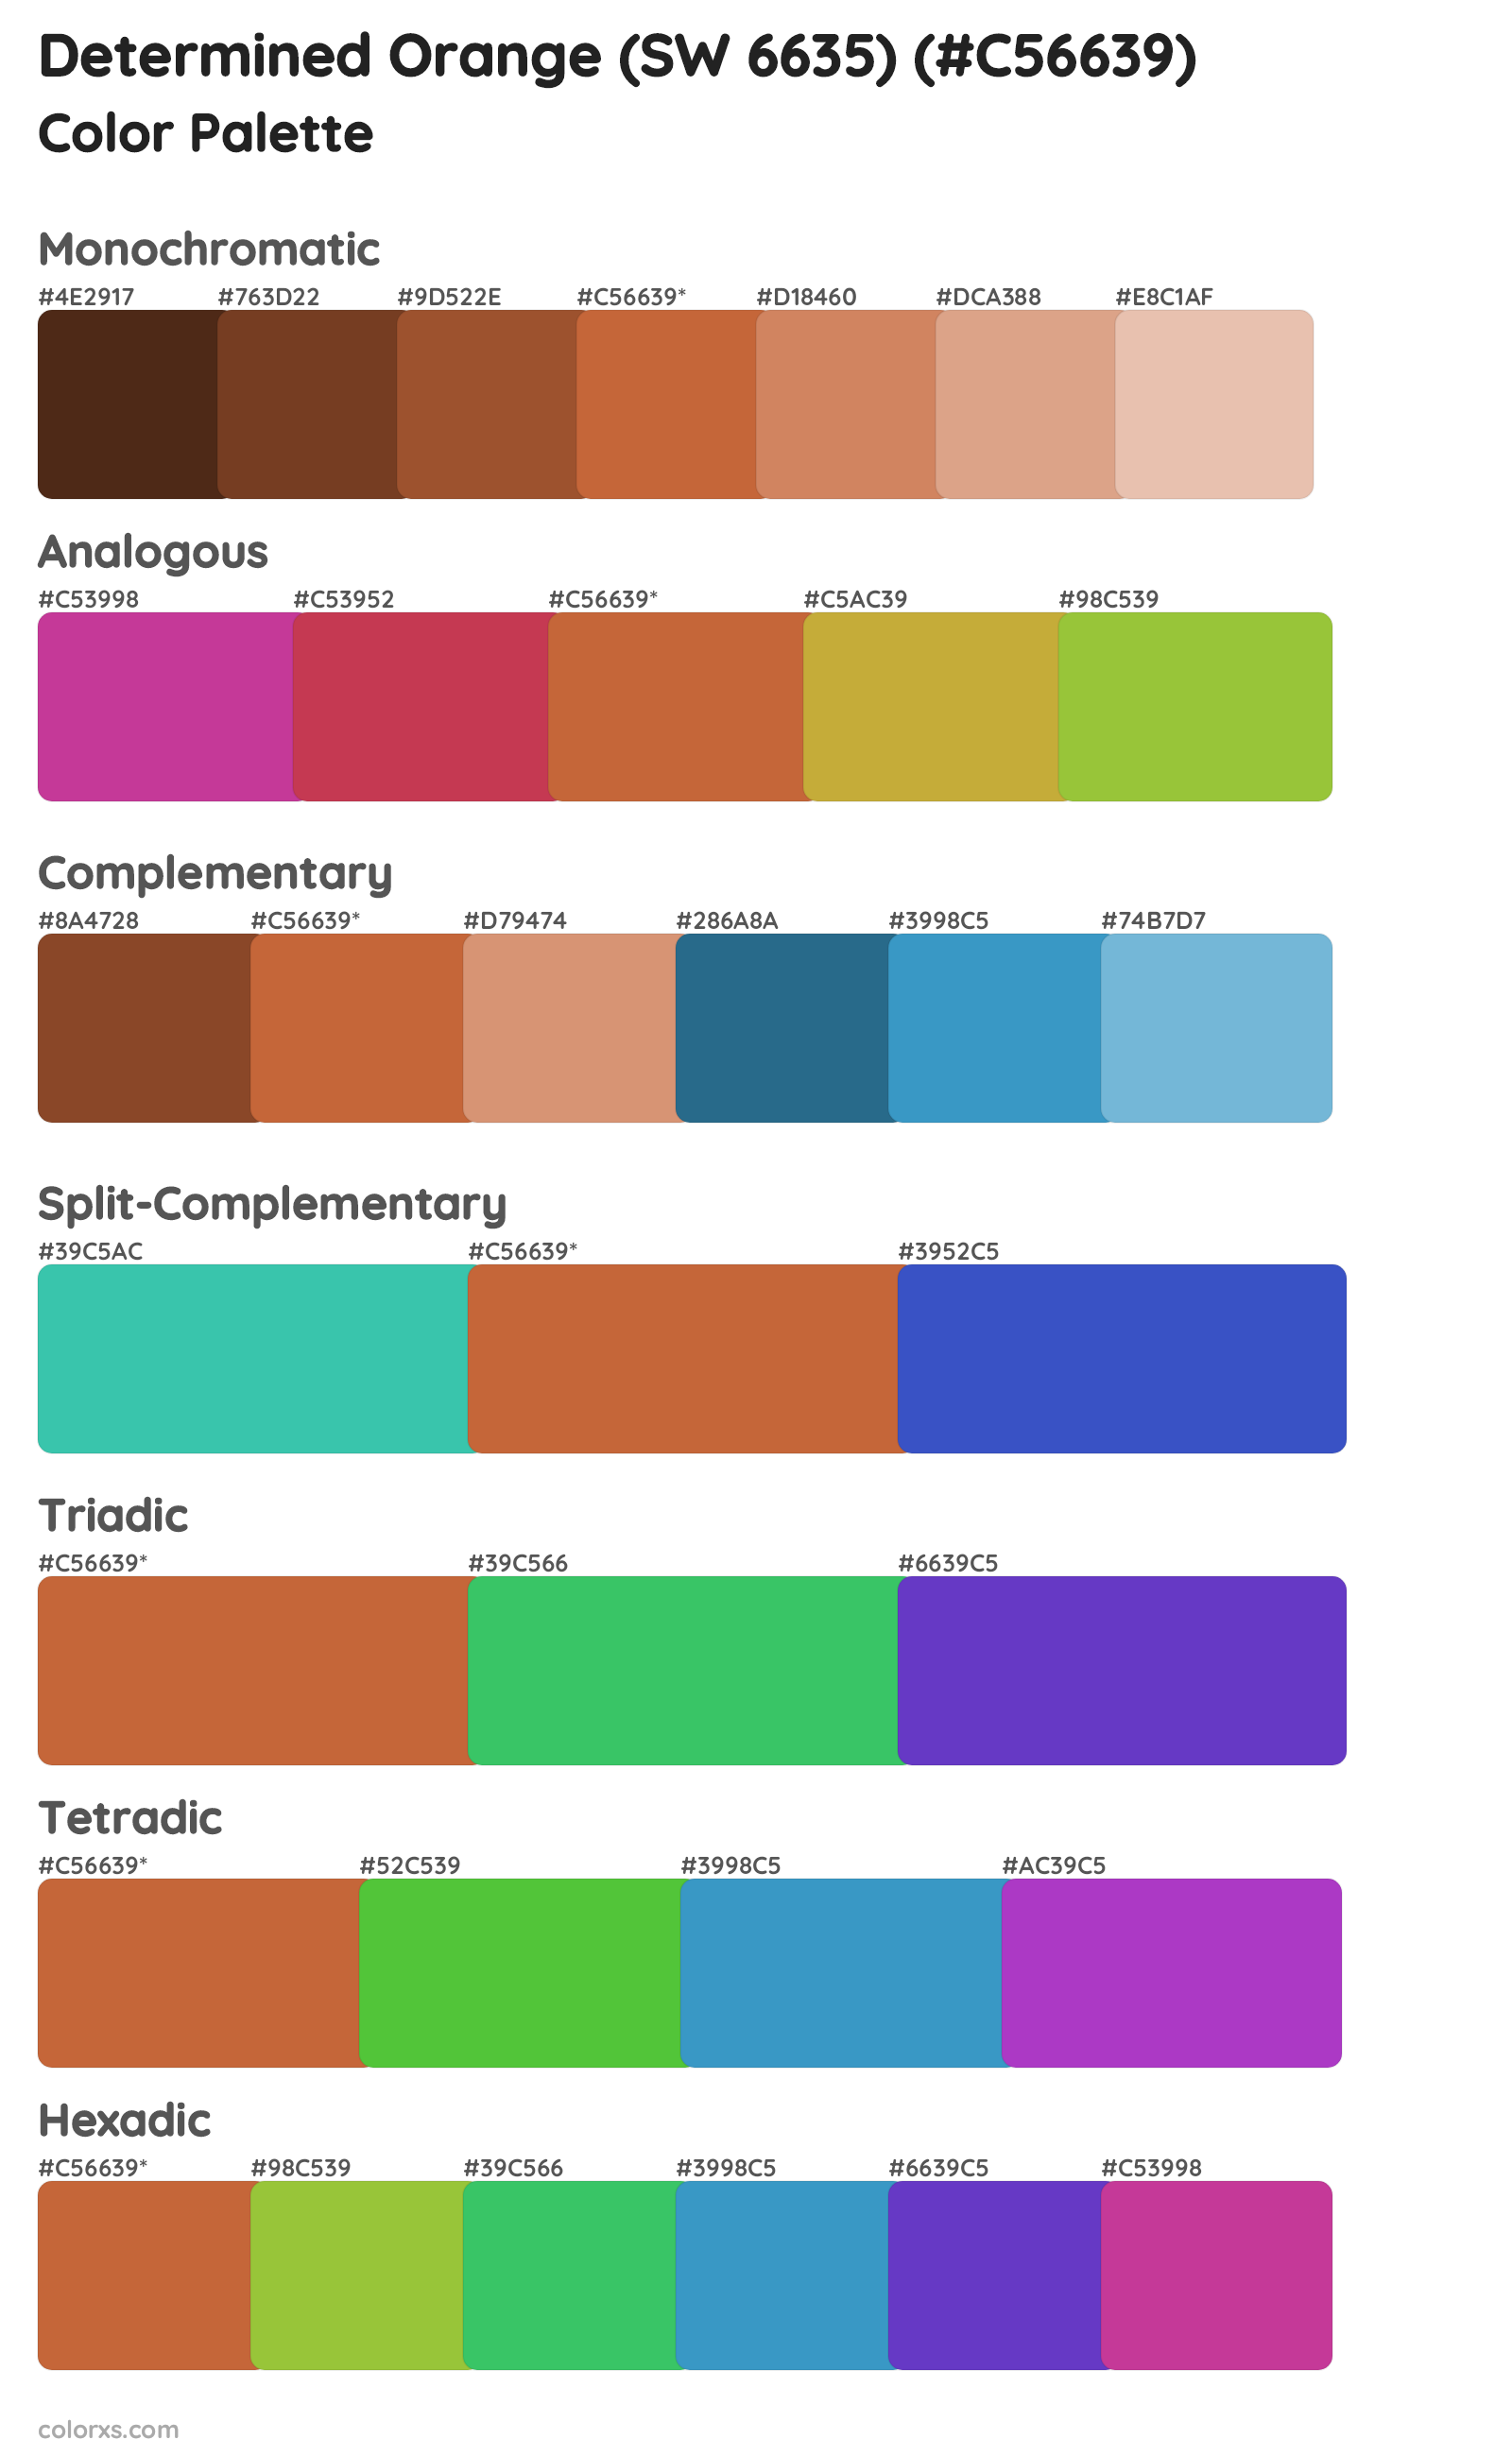 Determined Orange (SW 6635) Color Scheme Palettes